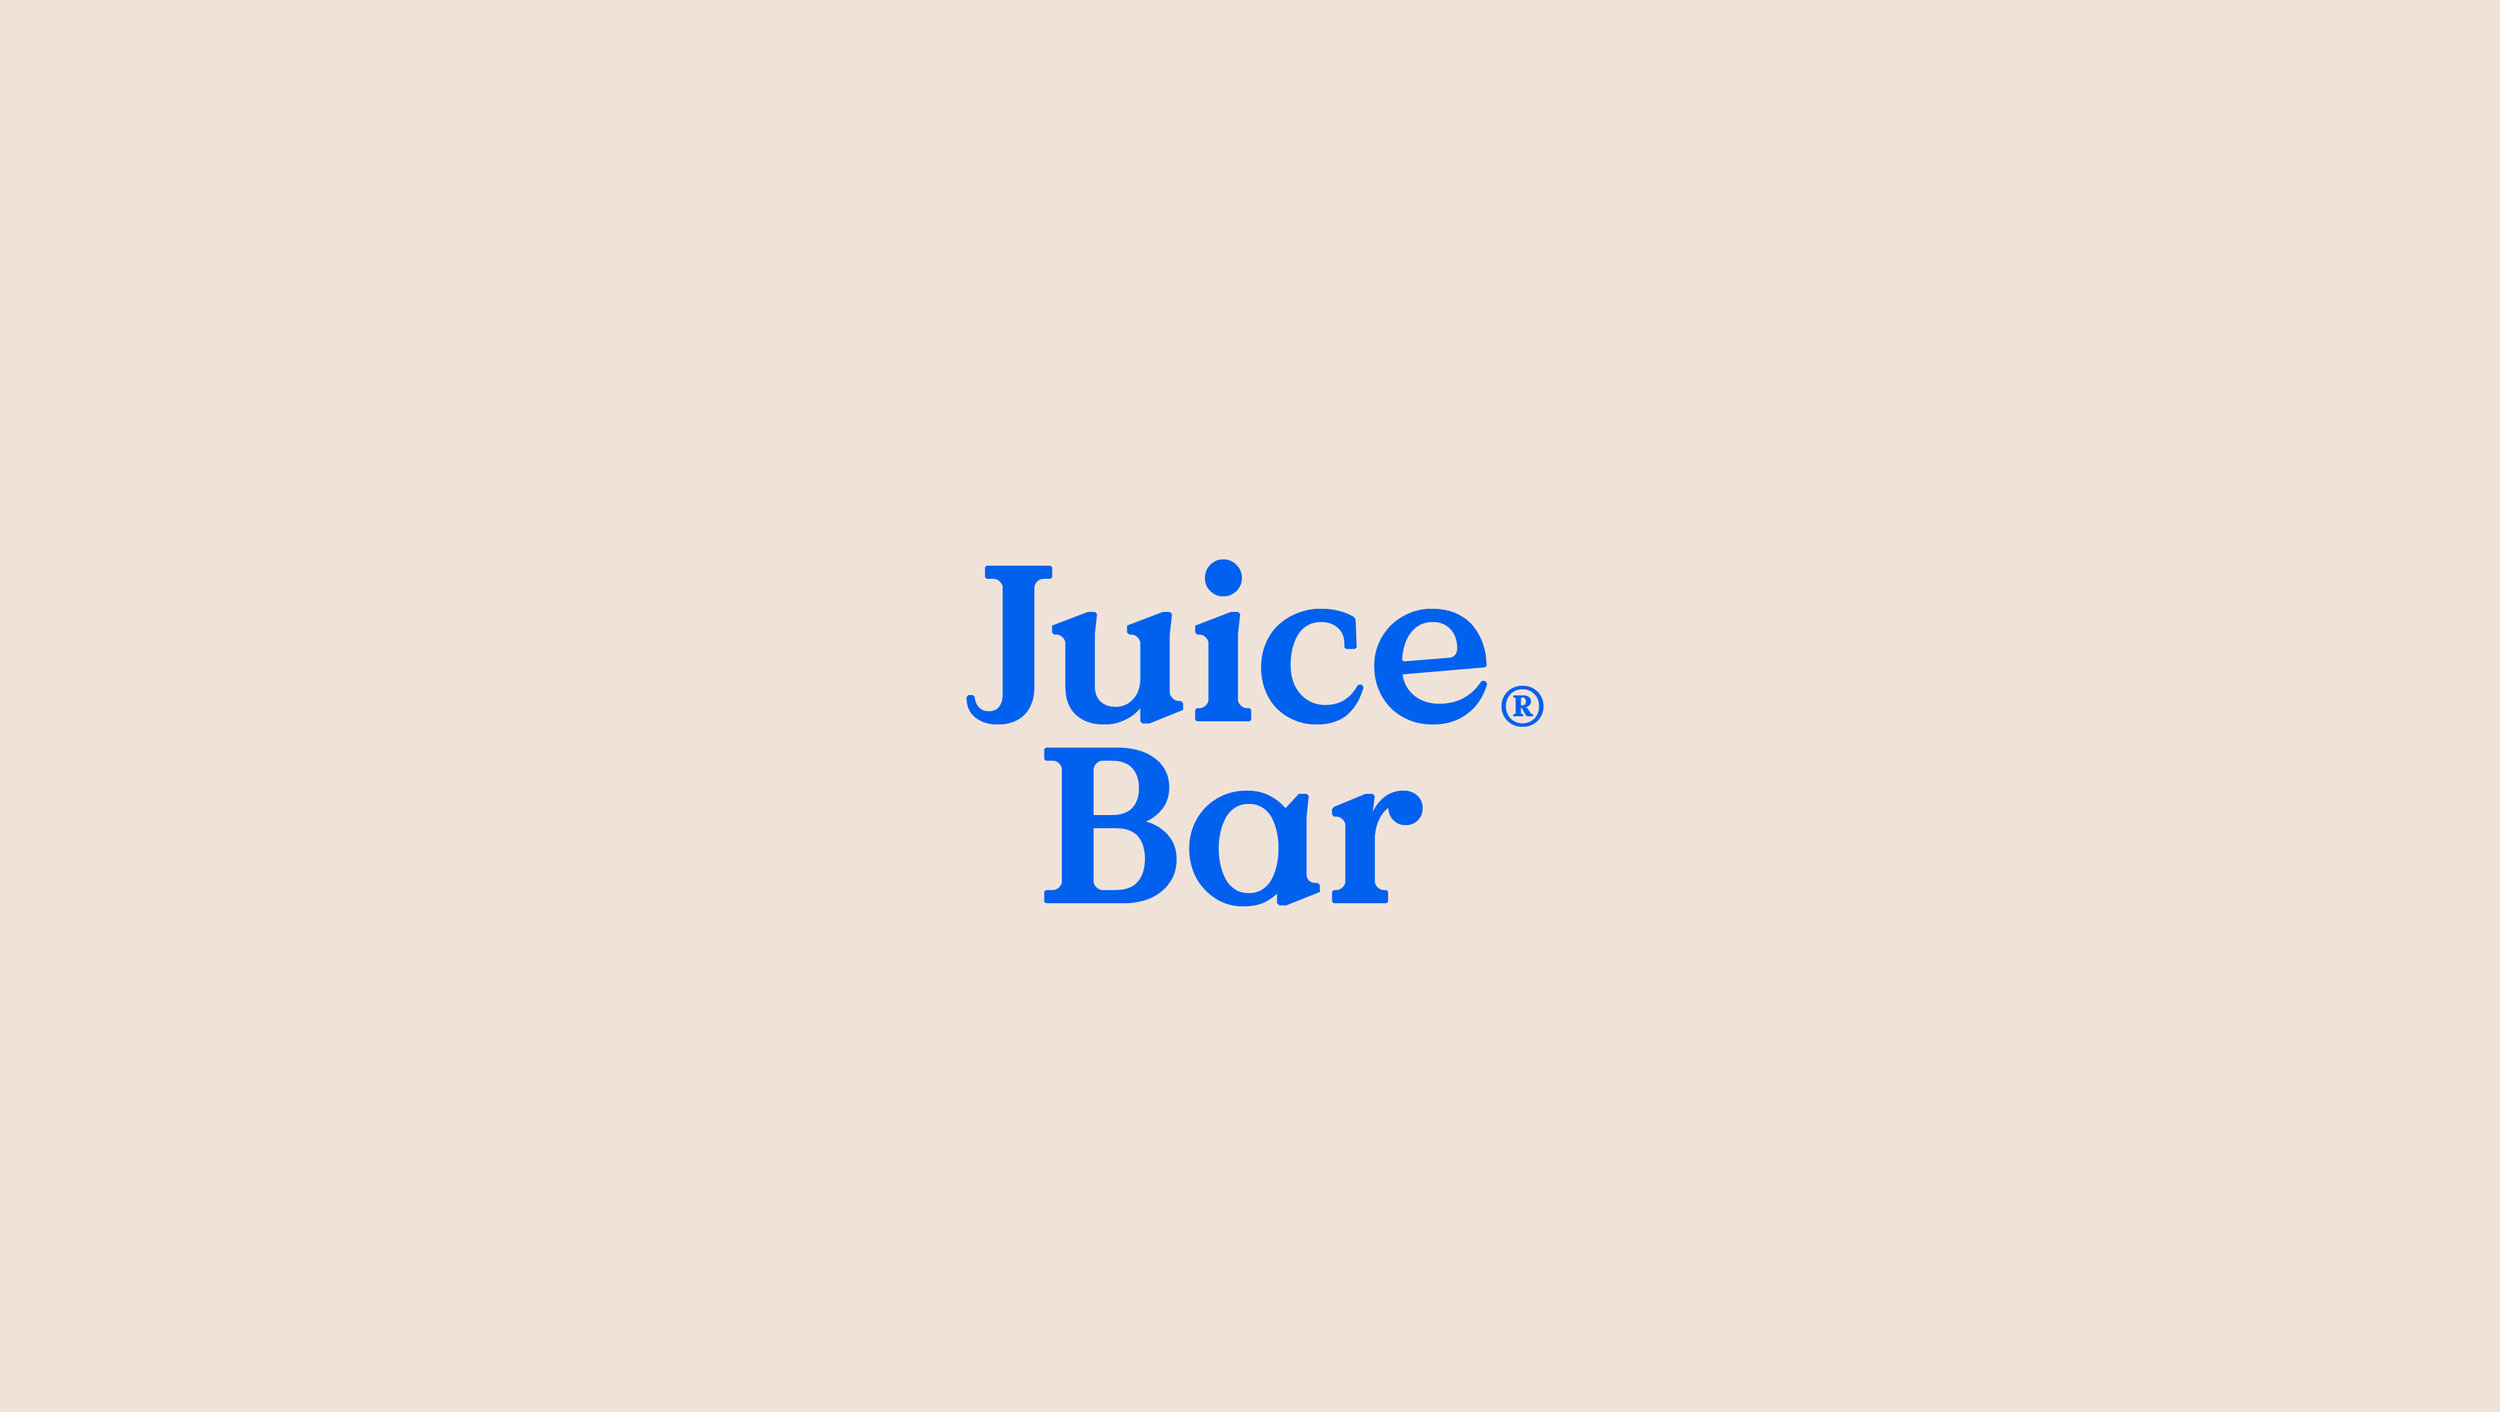 JuiceBoxBranding-01.jpg